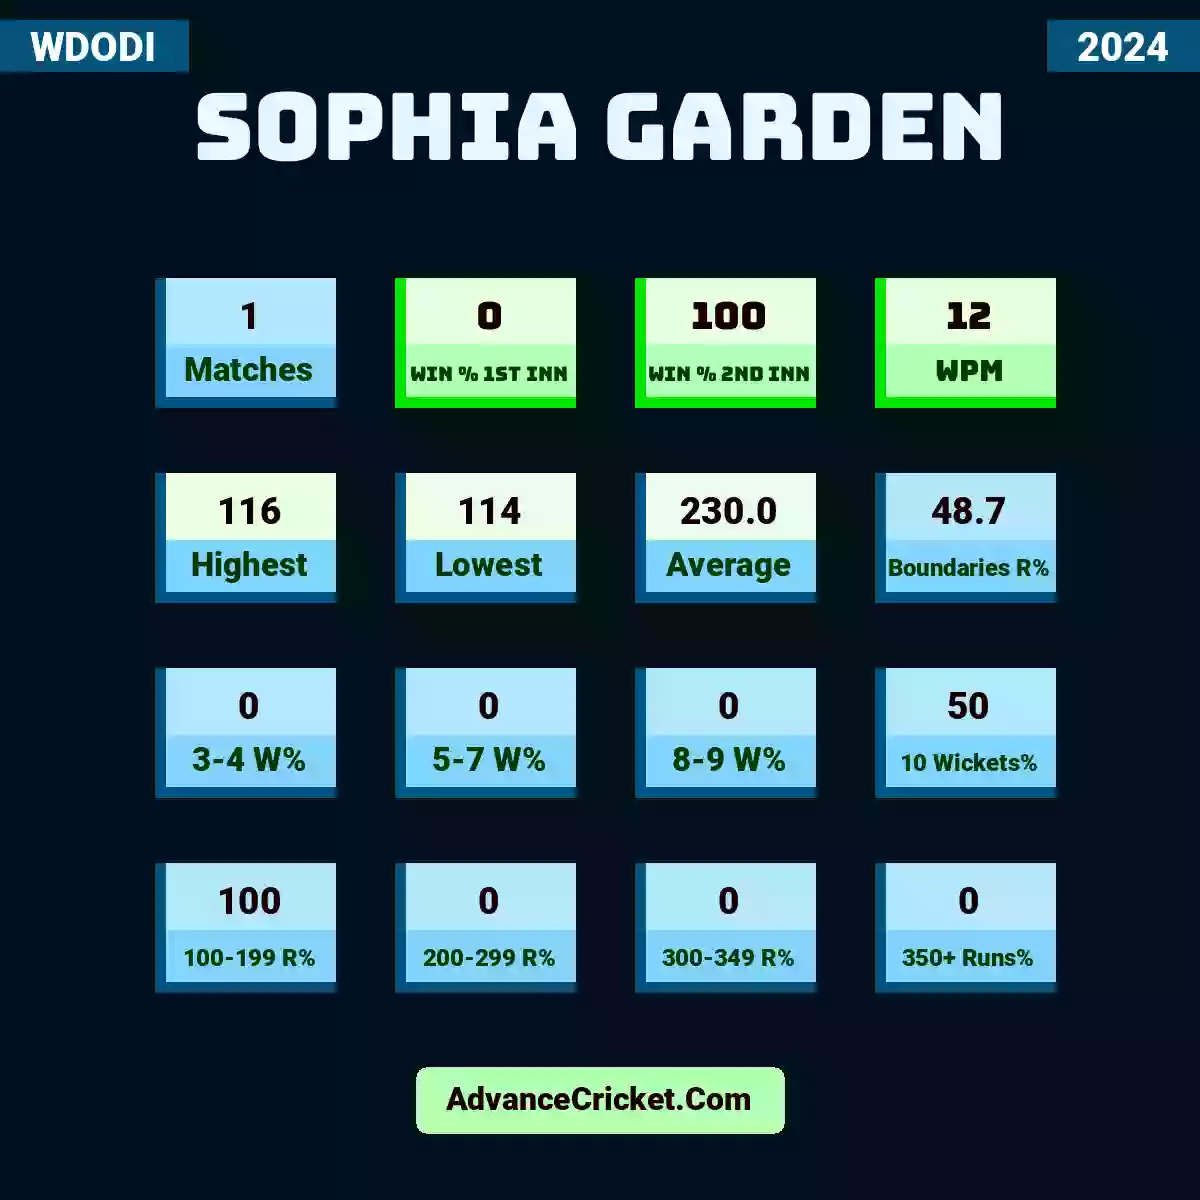 Image showing Sophia Garden WDODI 2024 with Matches: 1, Win % 1st Inn: 0, Win % 2nd Inn: 100, WPM: 12, Highest: 116, Lowest: 114, Average: 230.0, Boundaries R%: 48.7, 3-4 W%: 0, 5-7 W%: 0, 8-9 W%: 0, 10 Wickets%: 50, 100-199 R%: 100, 200-299 R%: 0, 300-349 R%: 0, 350+ Runs%: 0.